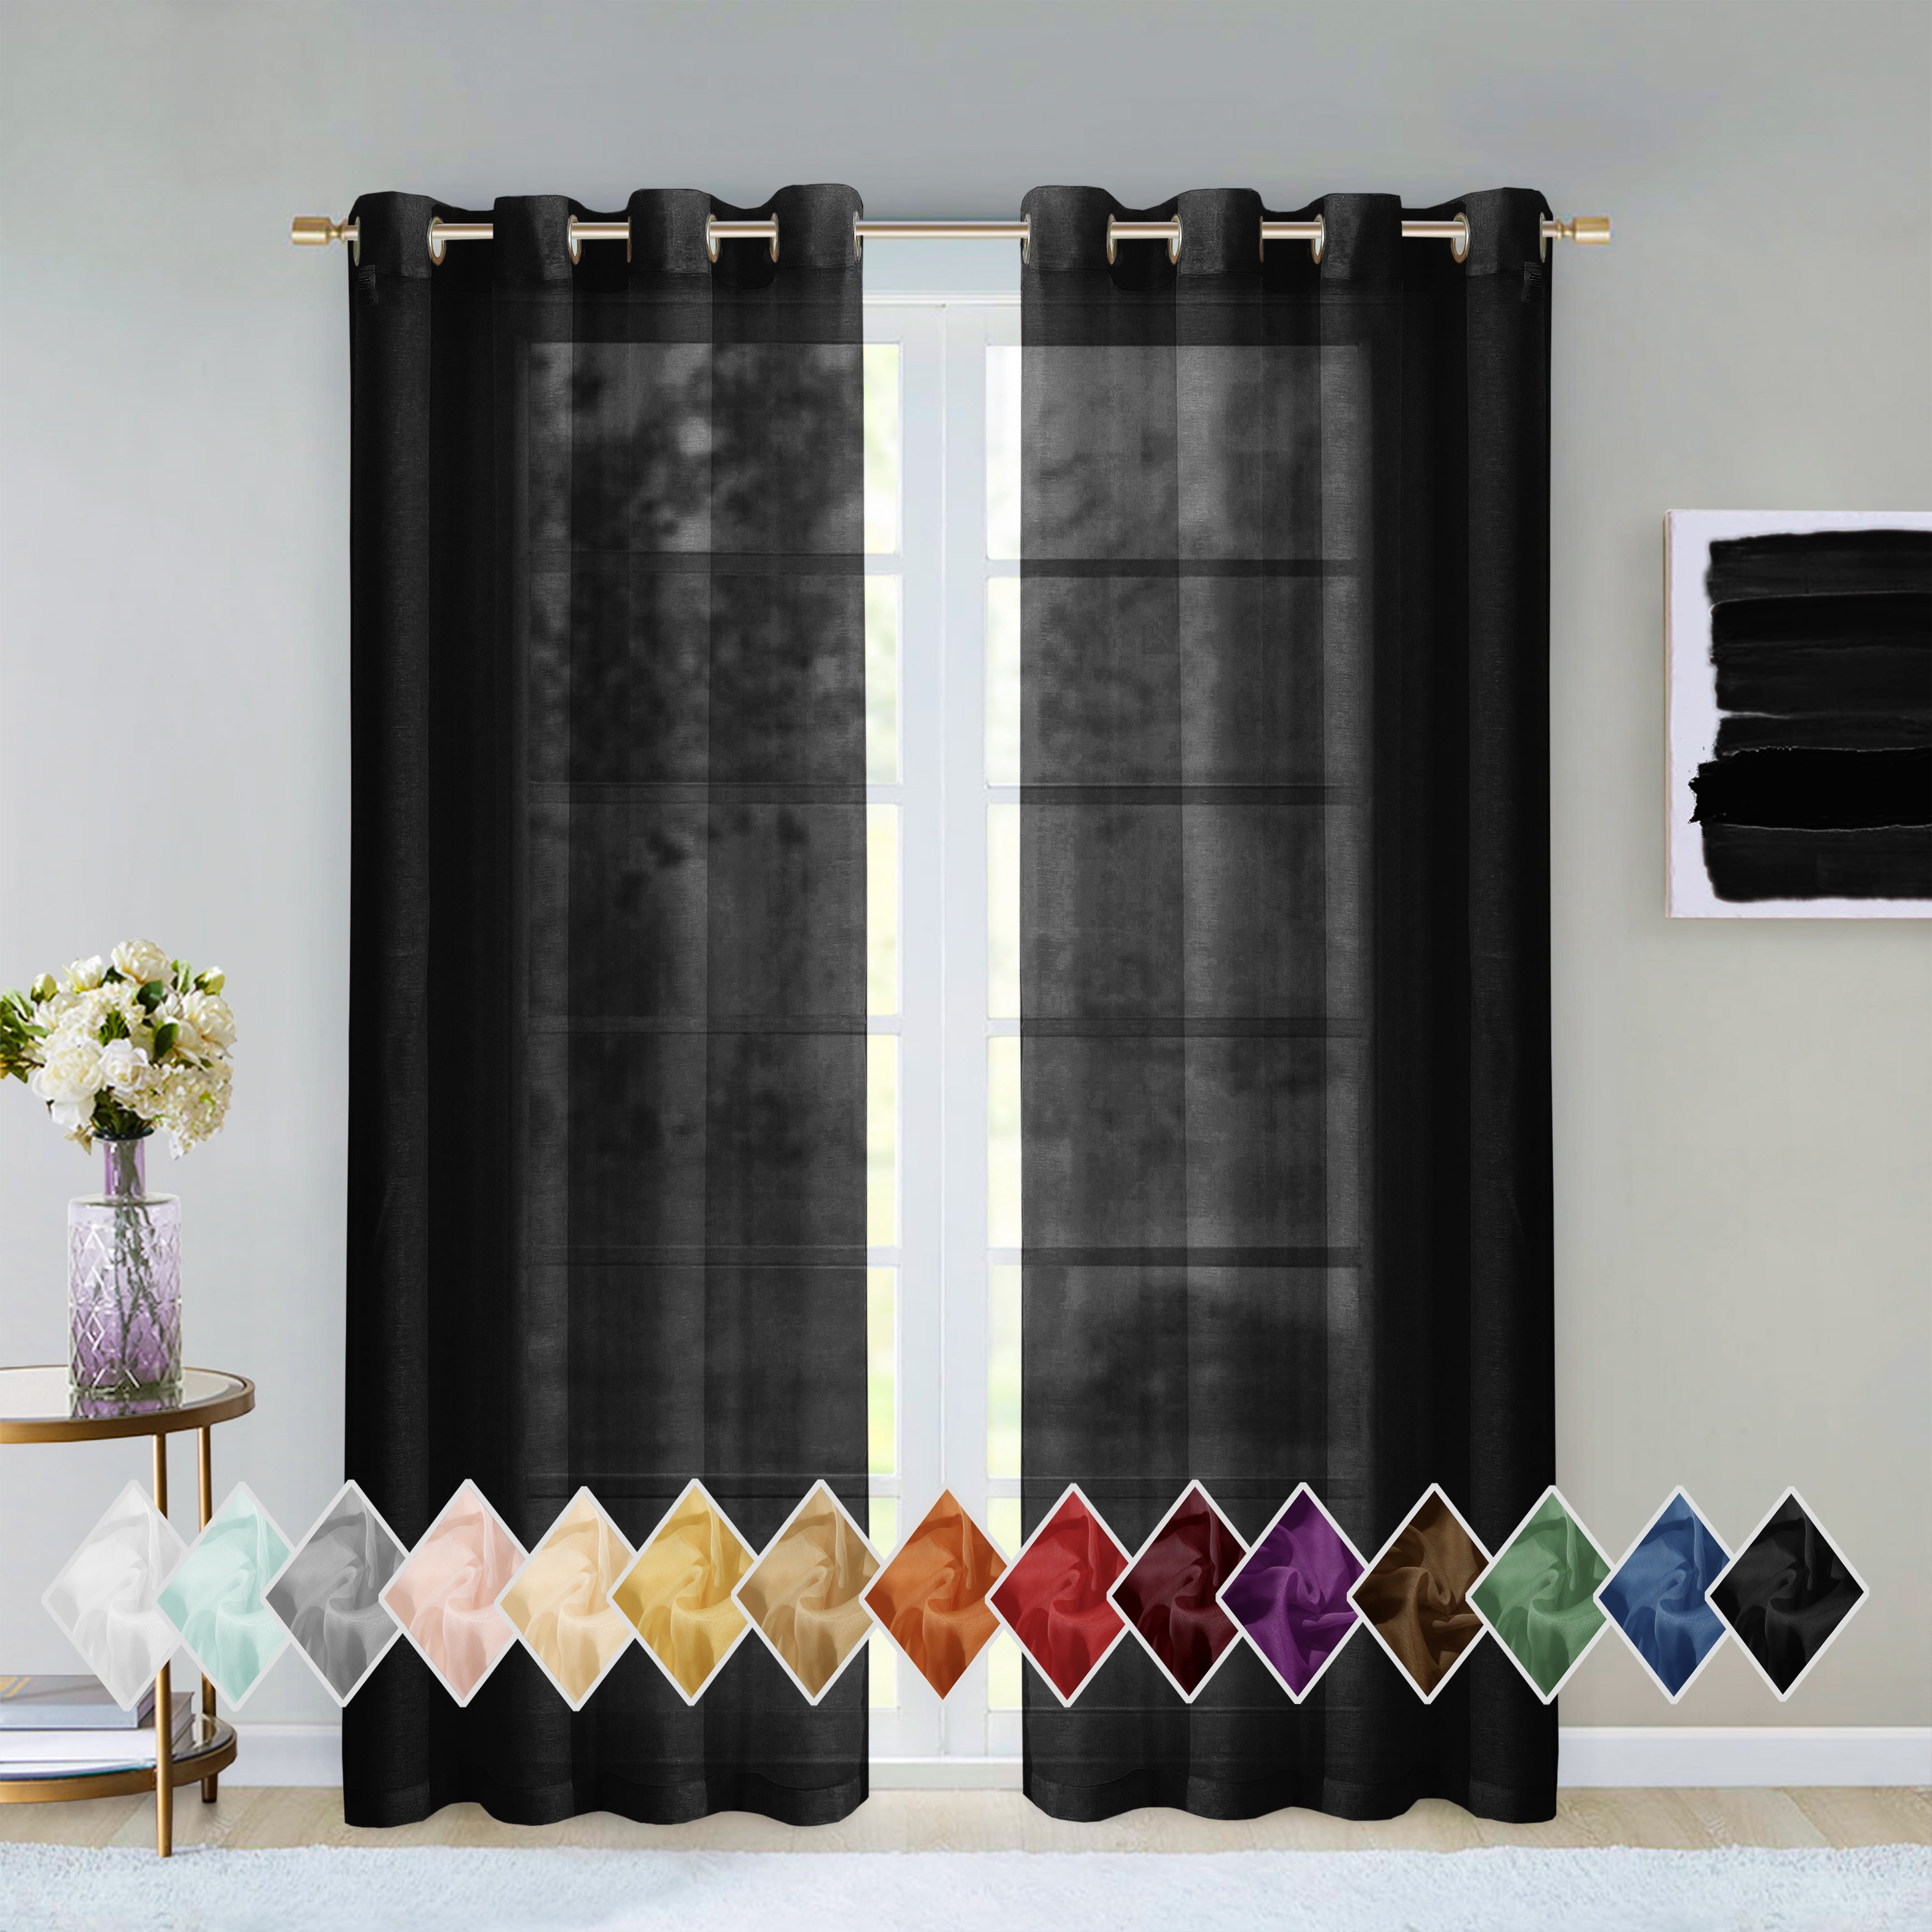 Fall Decor Curtains Seasonal Scenic Park Window Drapes 2 Panel Set 108x84 Inches 